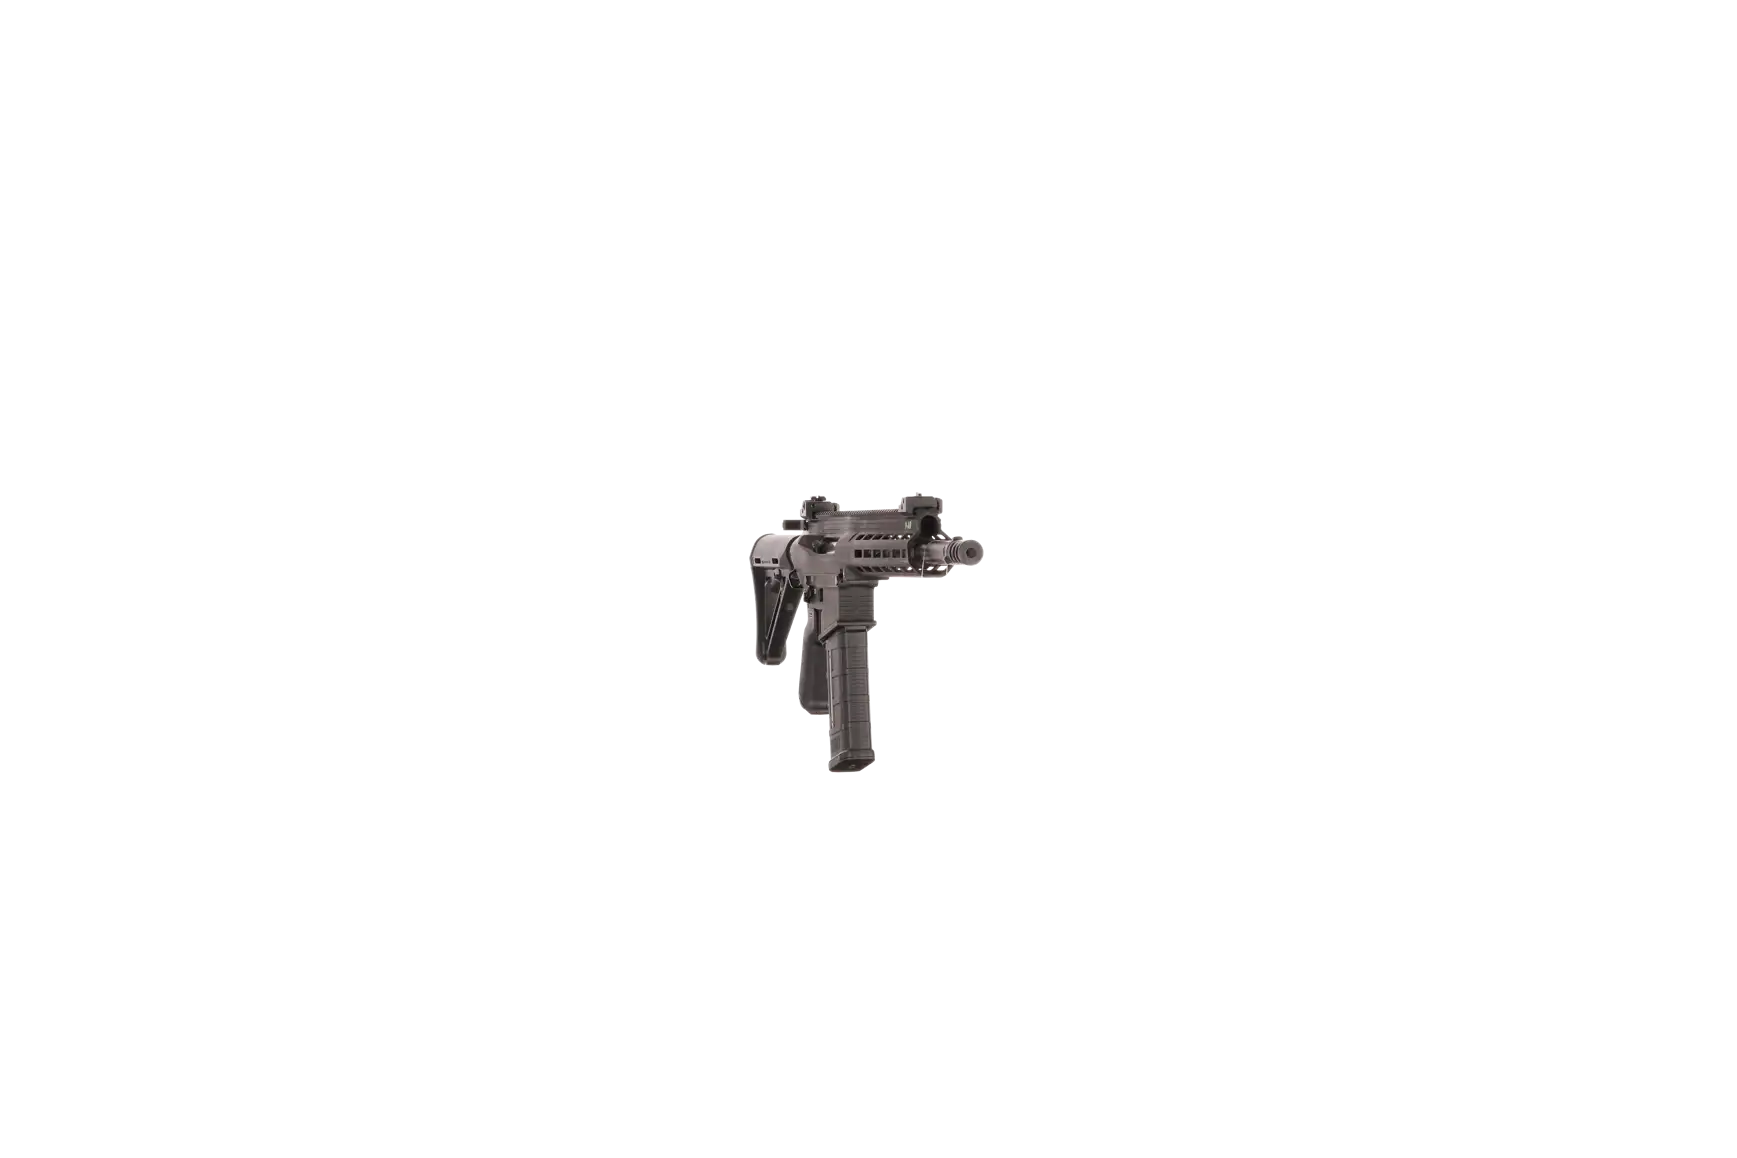 Náhledový obrázek pušky V-AR 762 x 45mm SPINVIEW 1 R16